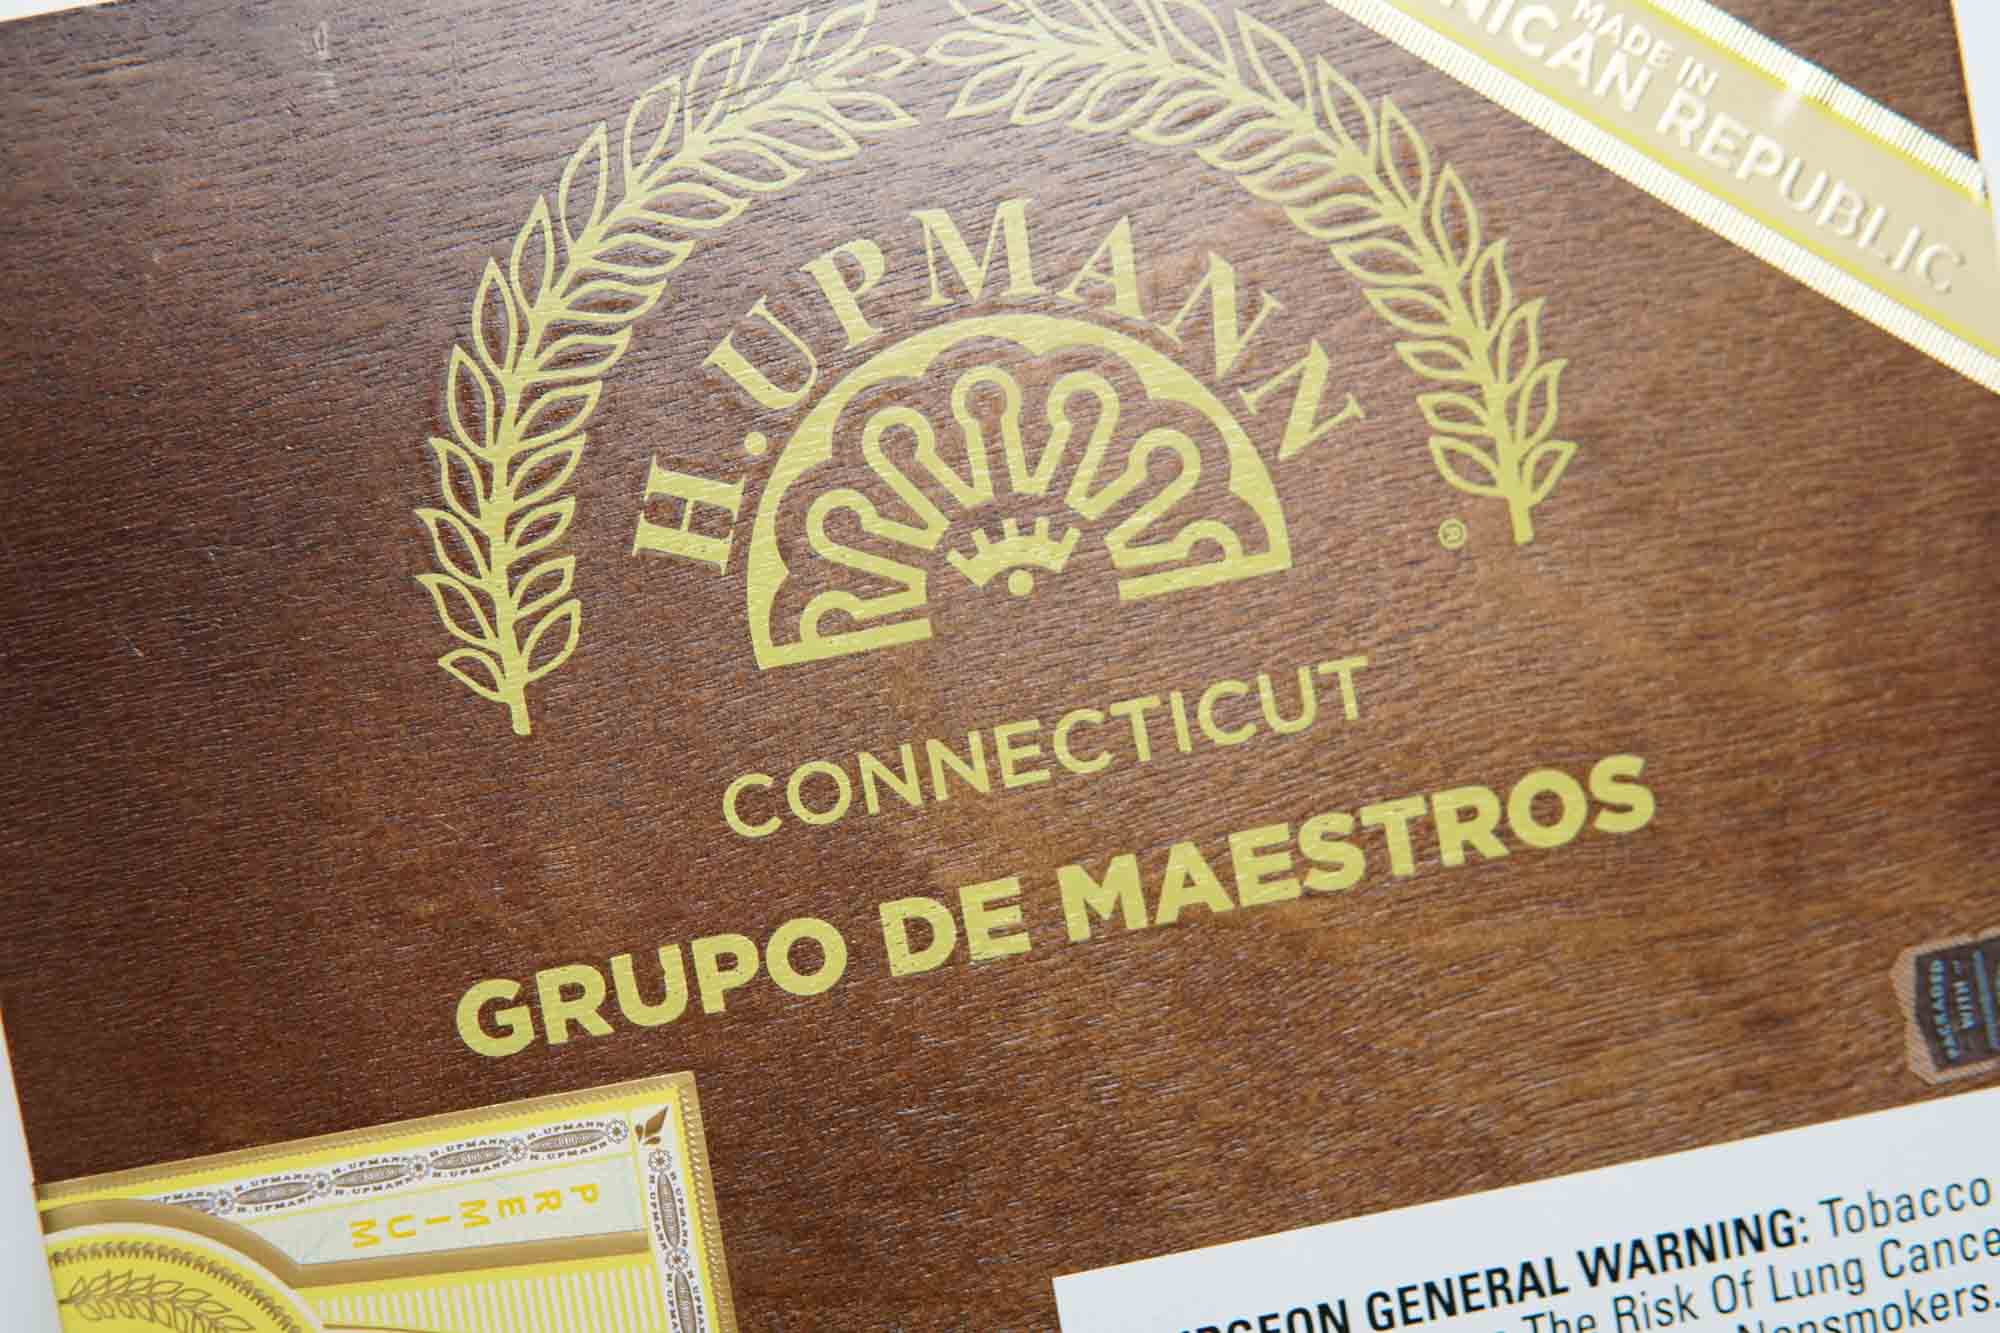 H Upmann Connecticut Cigar Box